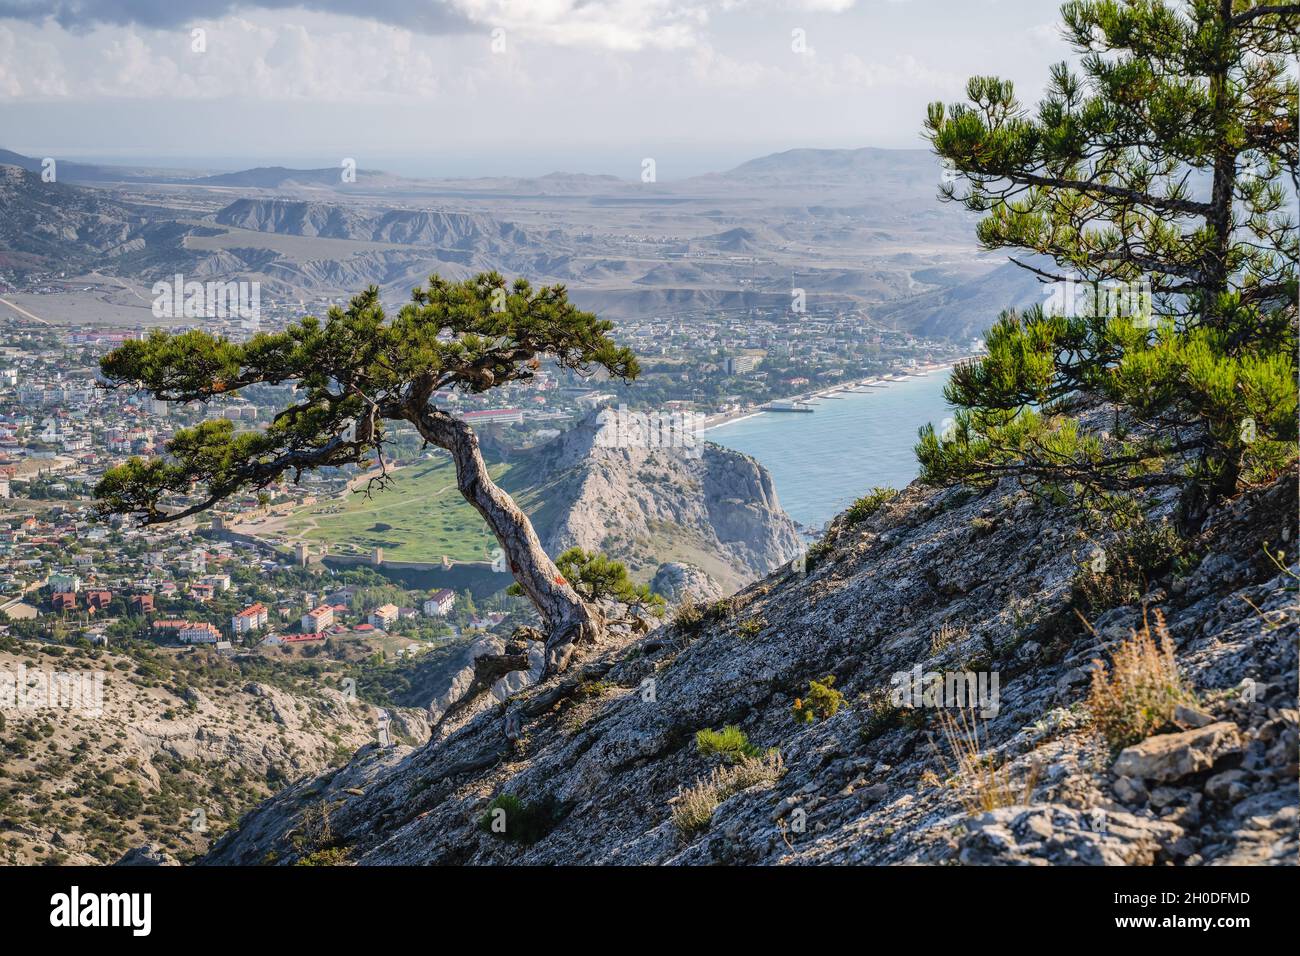 Die Bergkiefern am Hang des Berges Sokol Falcon in der Republik Krim. Zurück Meer Stockfoto